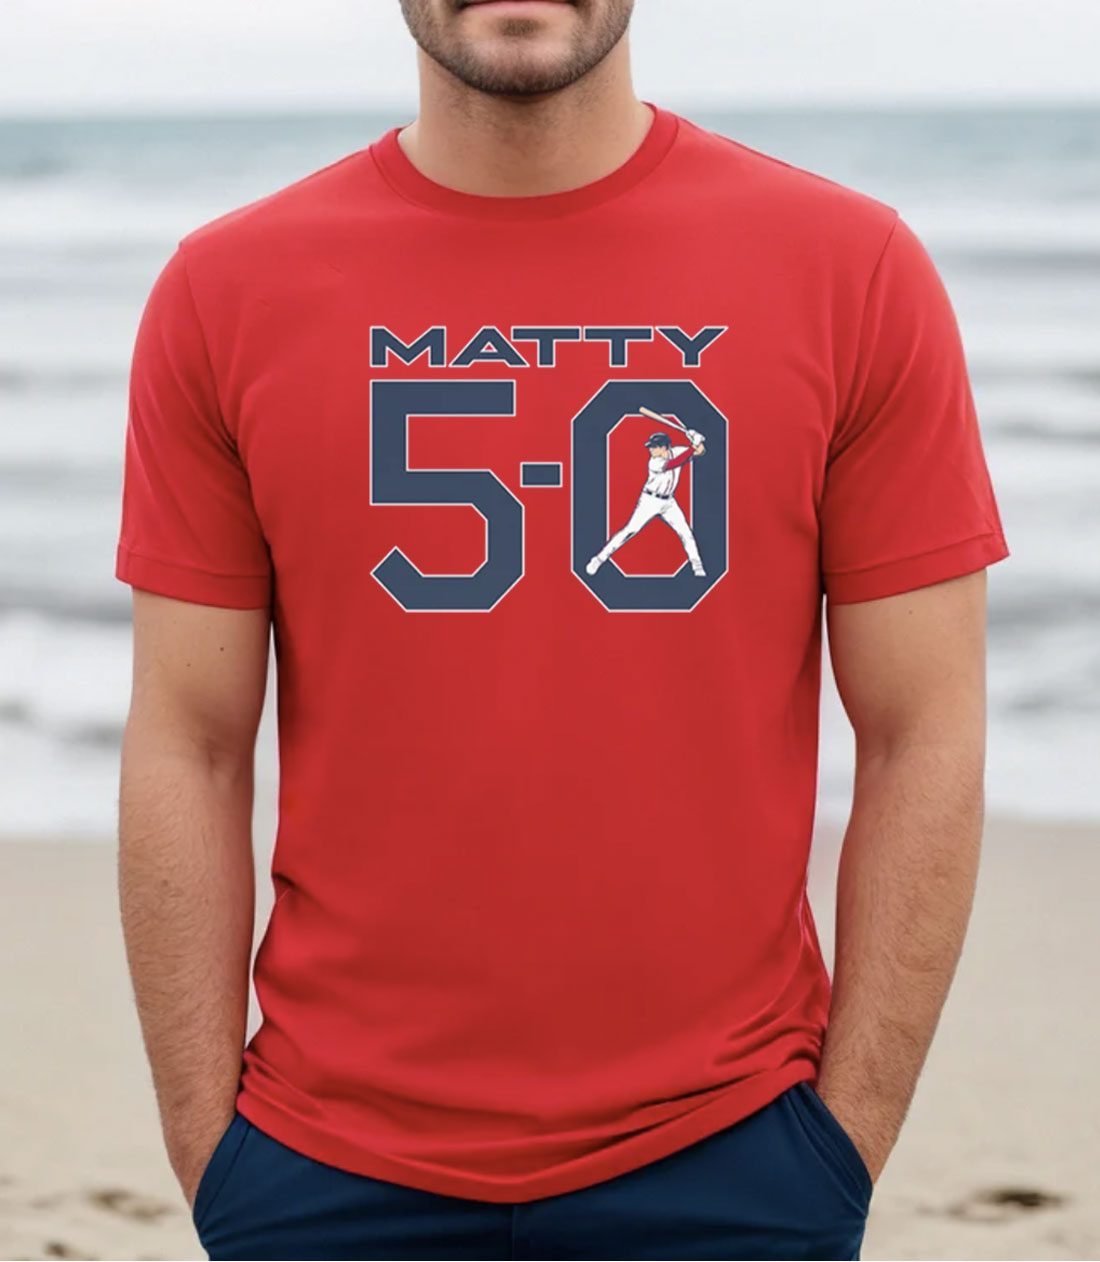 Matt Olson Matty 5-0 Shirt - Shibtee Clothing